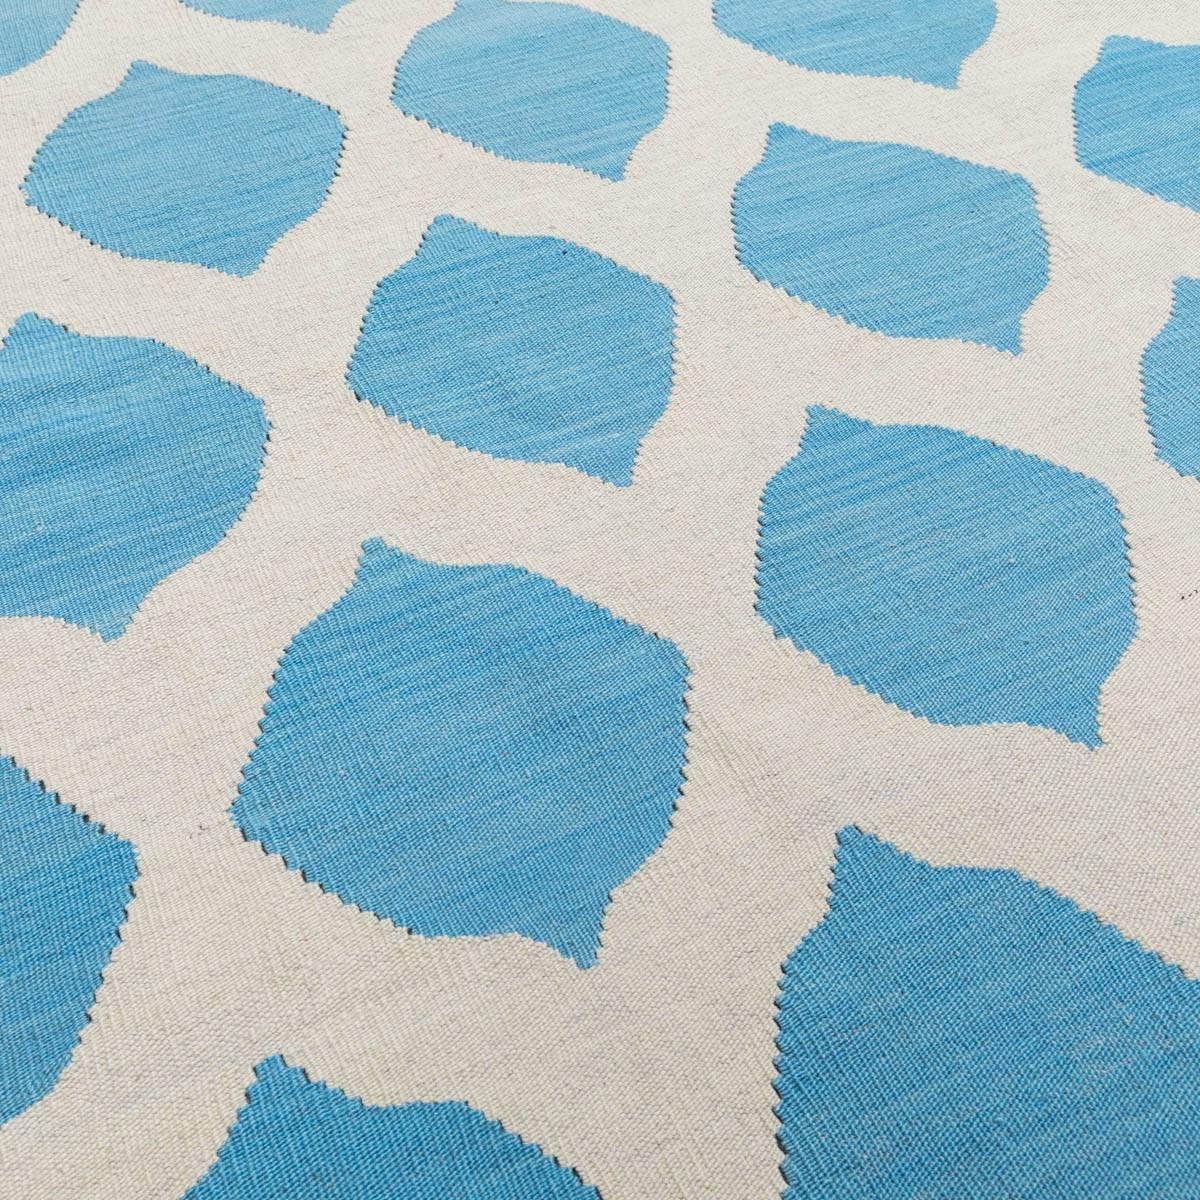 Afghan Blue and Beige Handmade Flat-Weave Kilim. 2.85 x 2.65 m For Sale